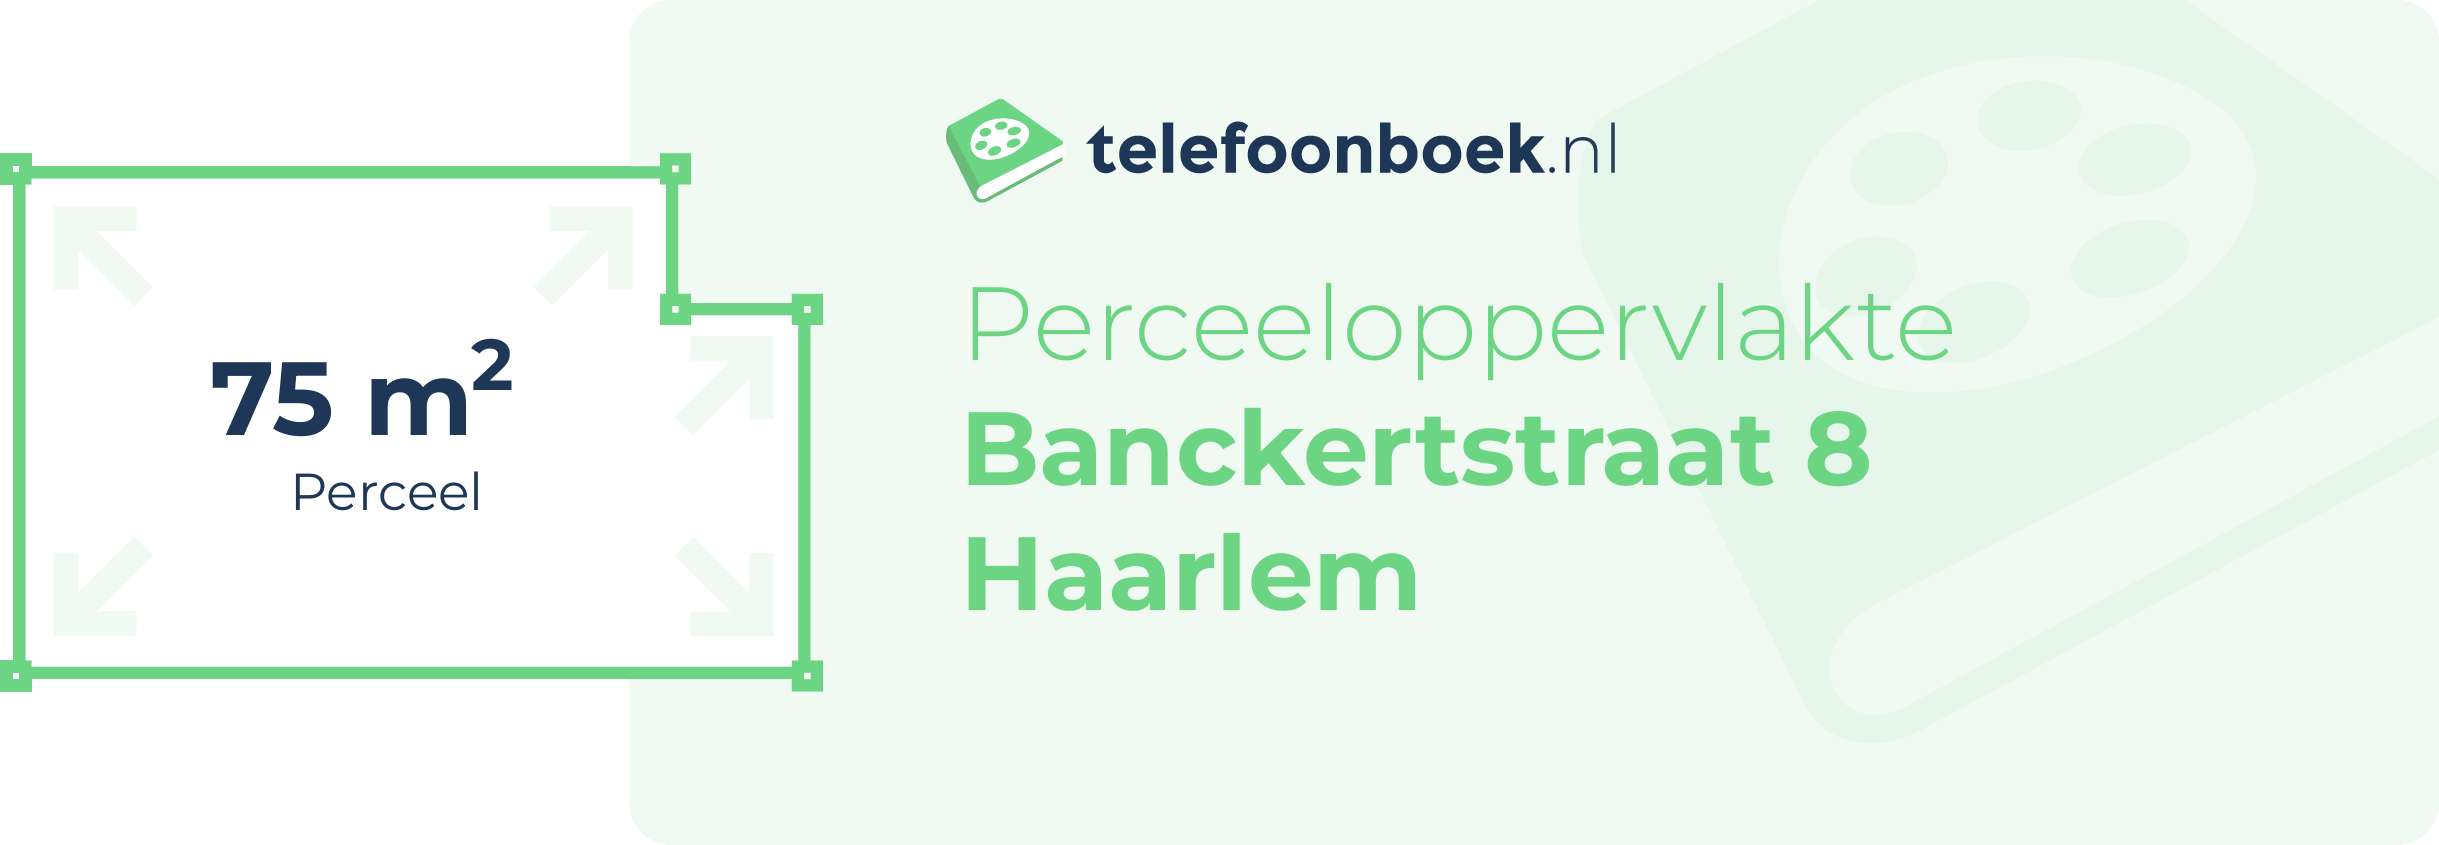 Perceeloppervlakte Banckertstraat 8 Haarlem